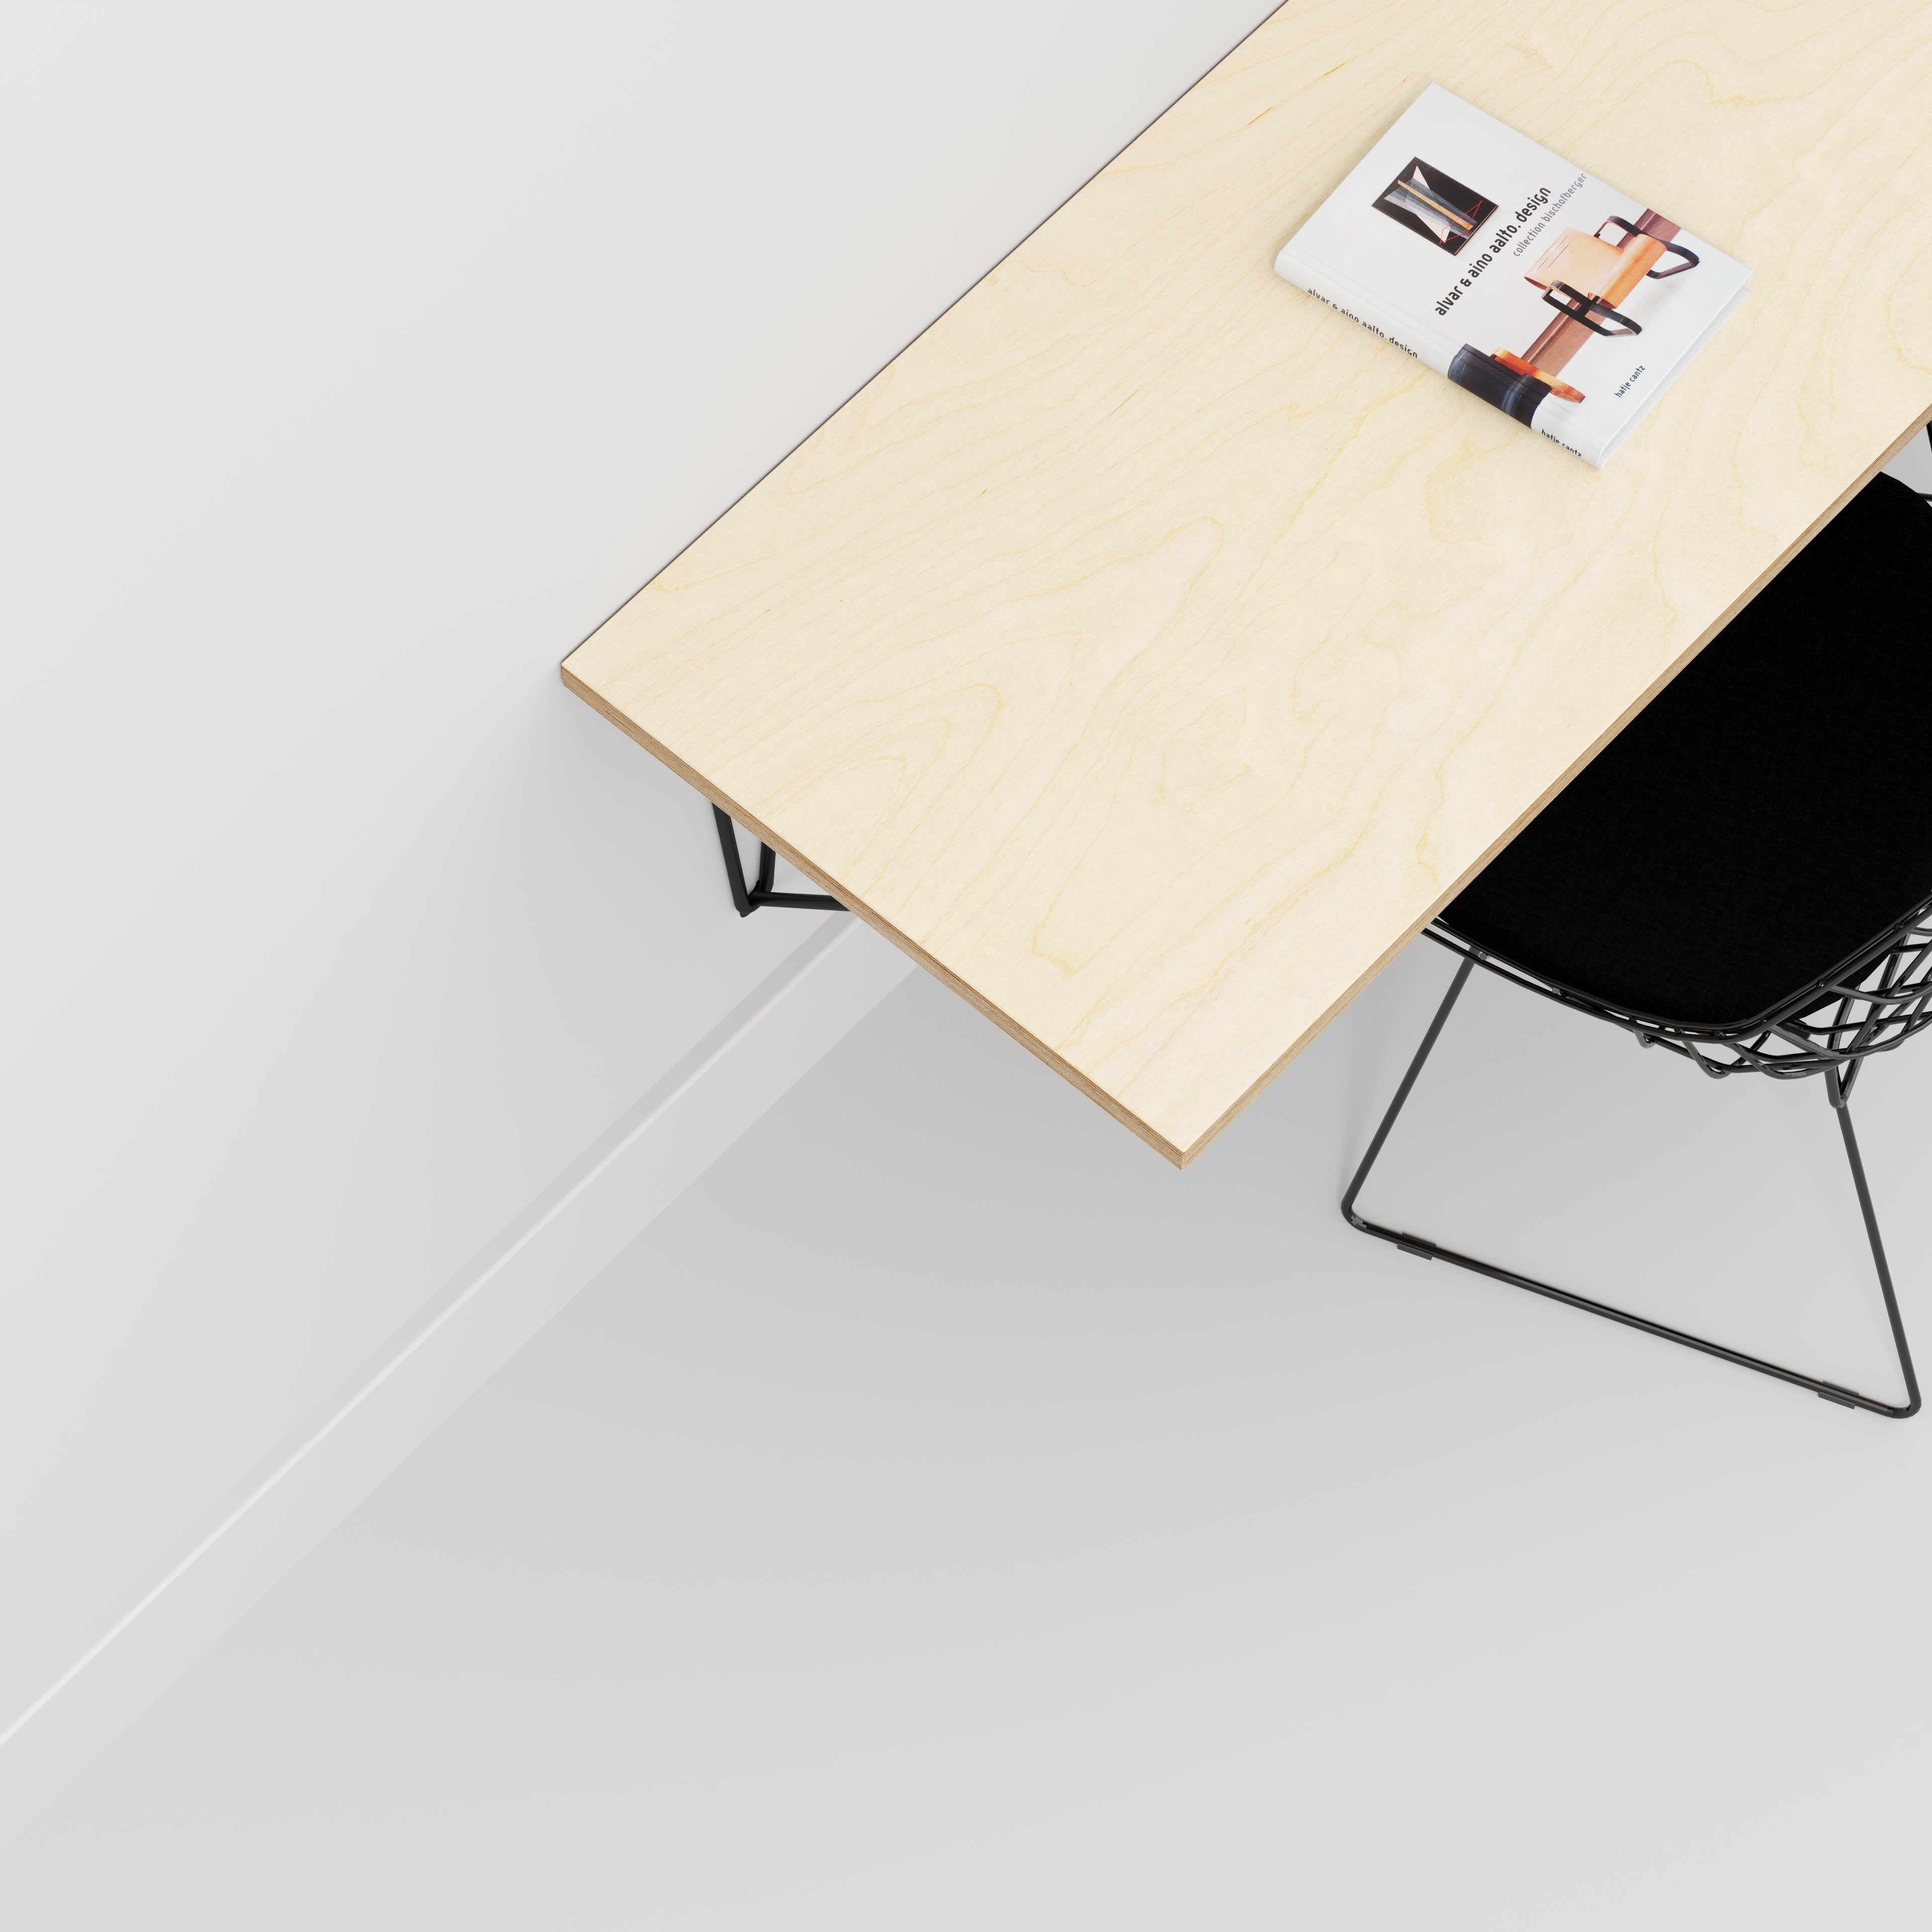 Custom Plywood Wall Desk with Prism Wall Brackets